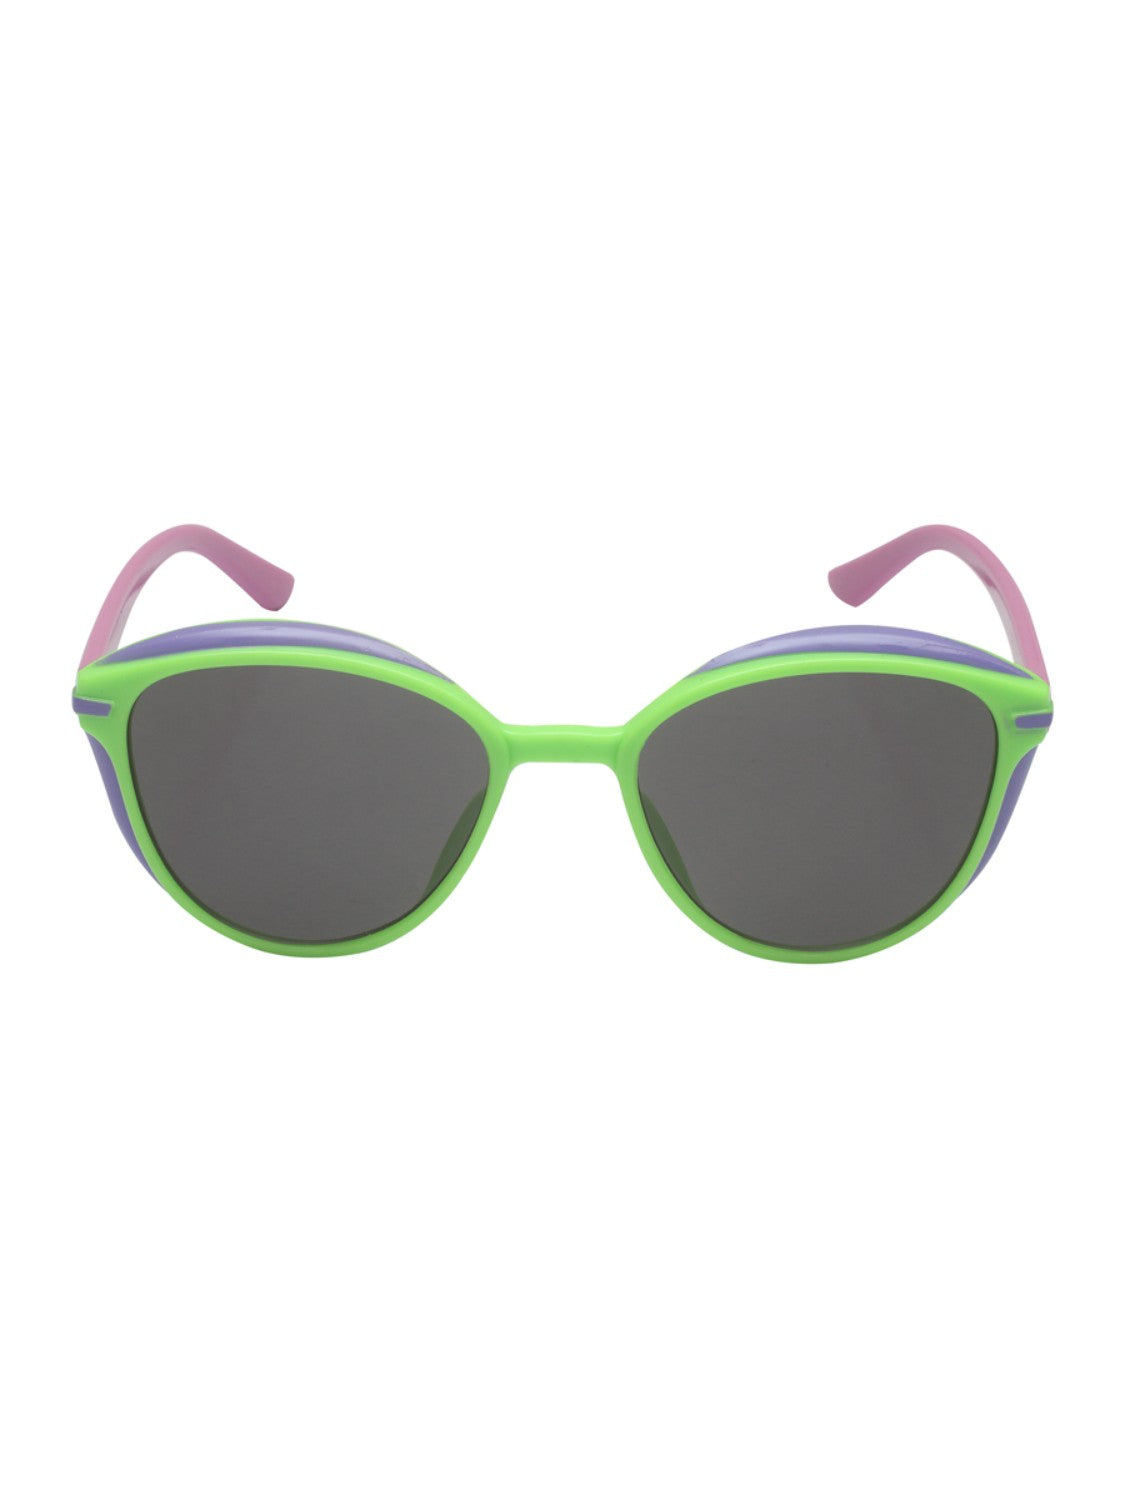 Stol'n Kids Green and Purple Aviator Sunglasses - Green and Purple